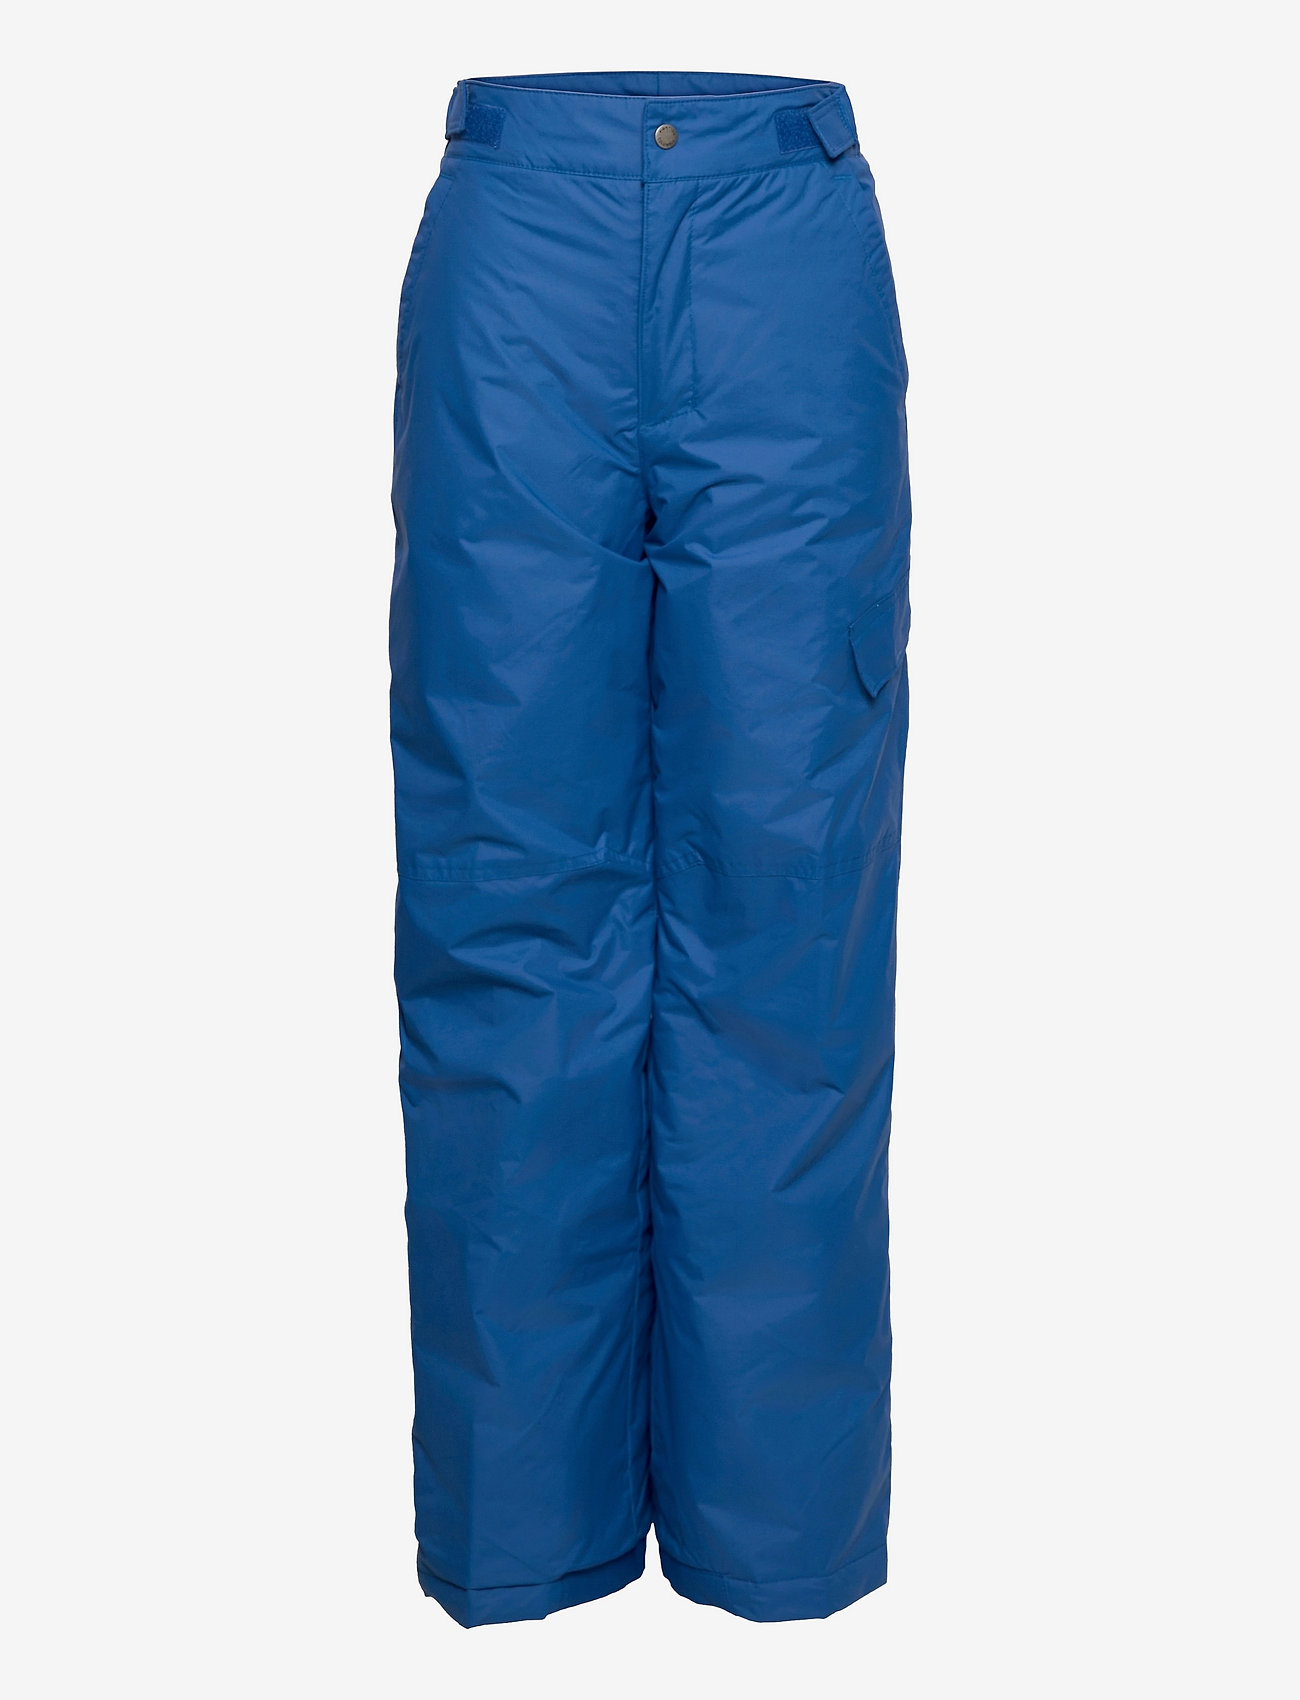 Columbia Sportswear - Ice Slope II Pant - hiihto- & lasketteluhousut - bright indigo - 0